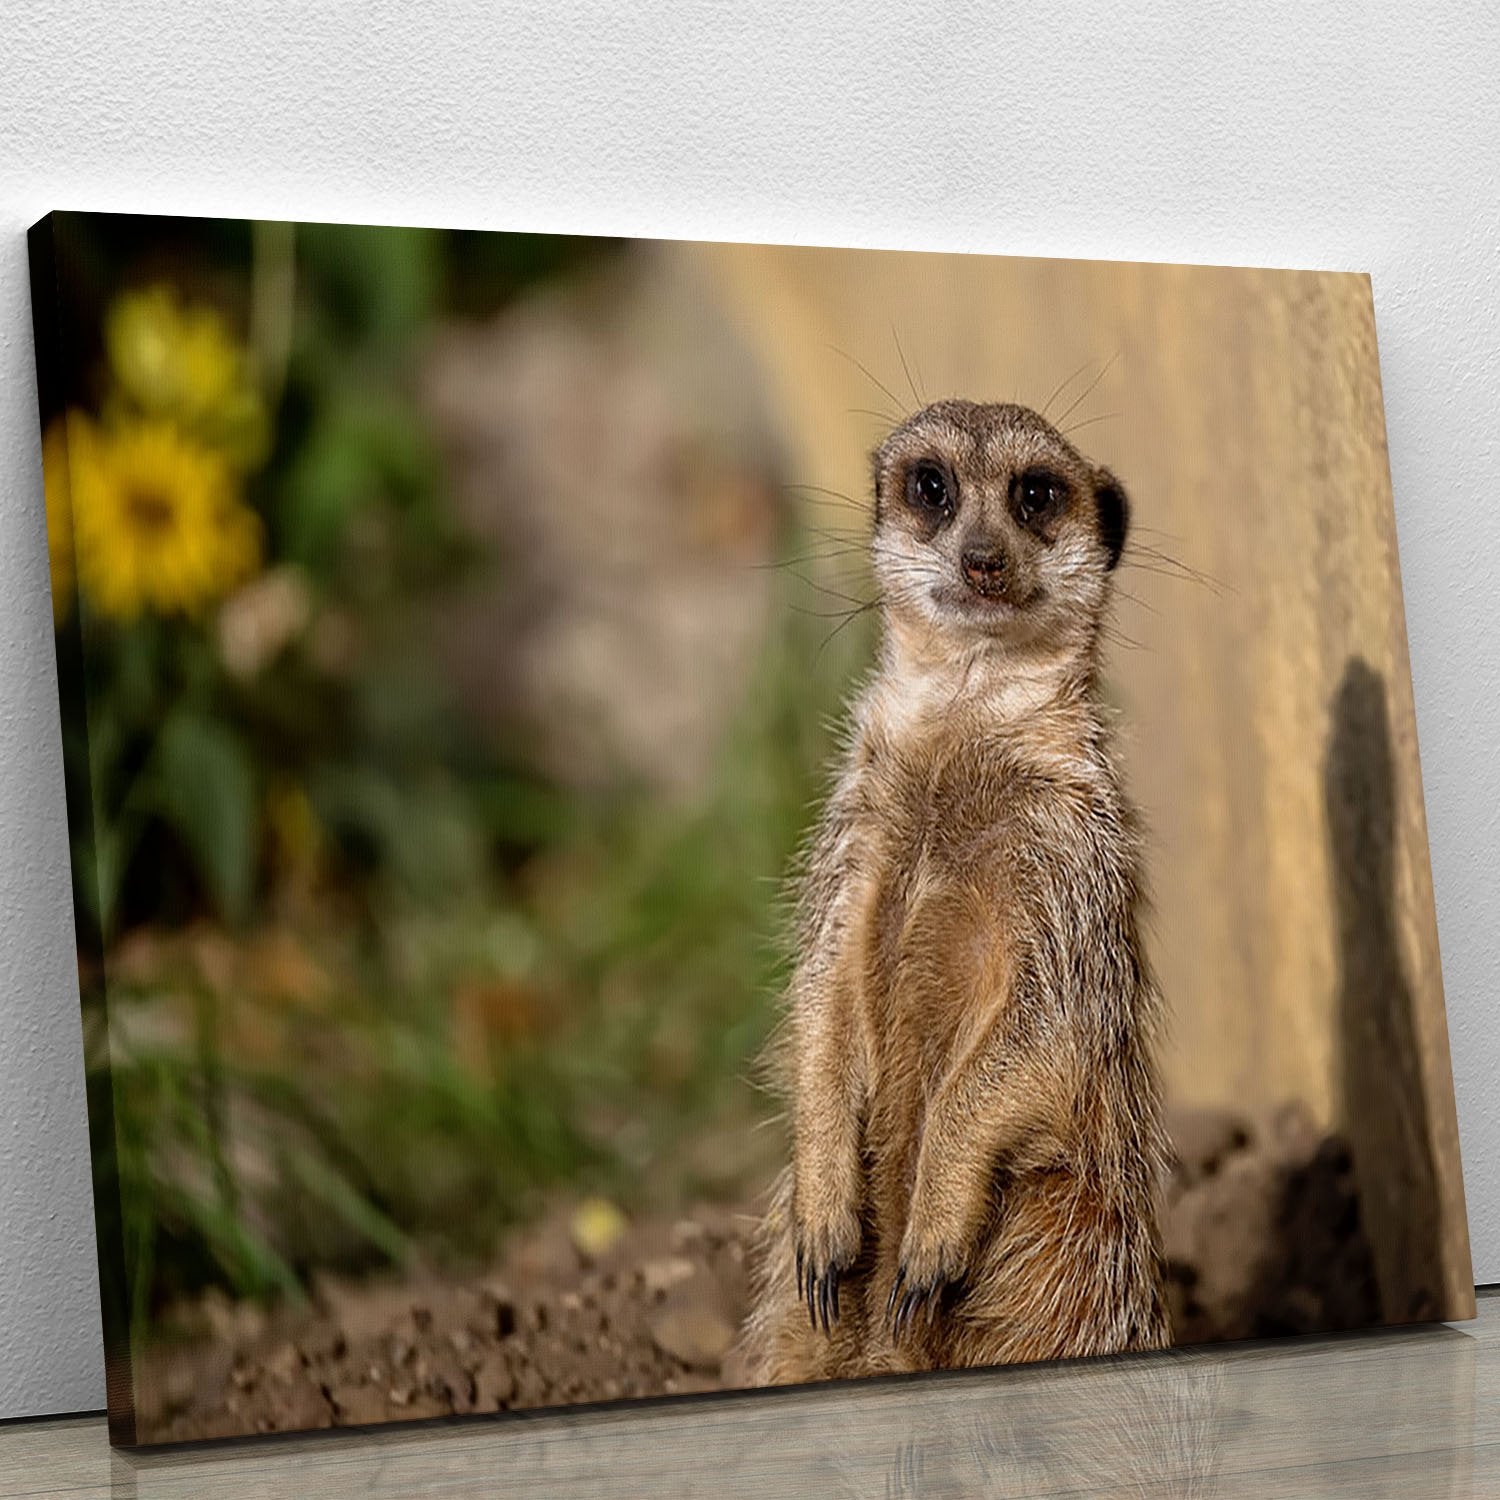 Meerkat in the wild portrait Canvas Print or Poster